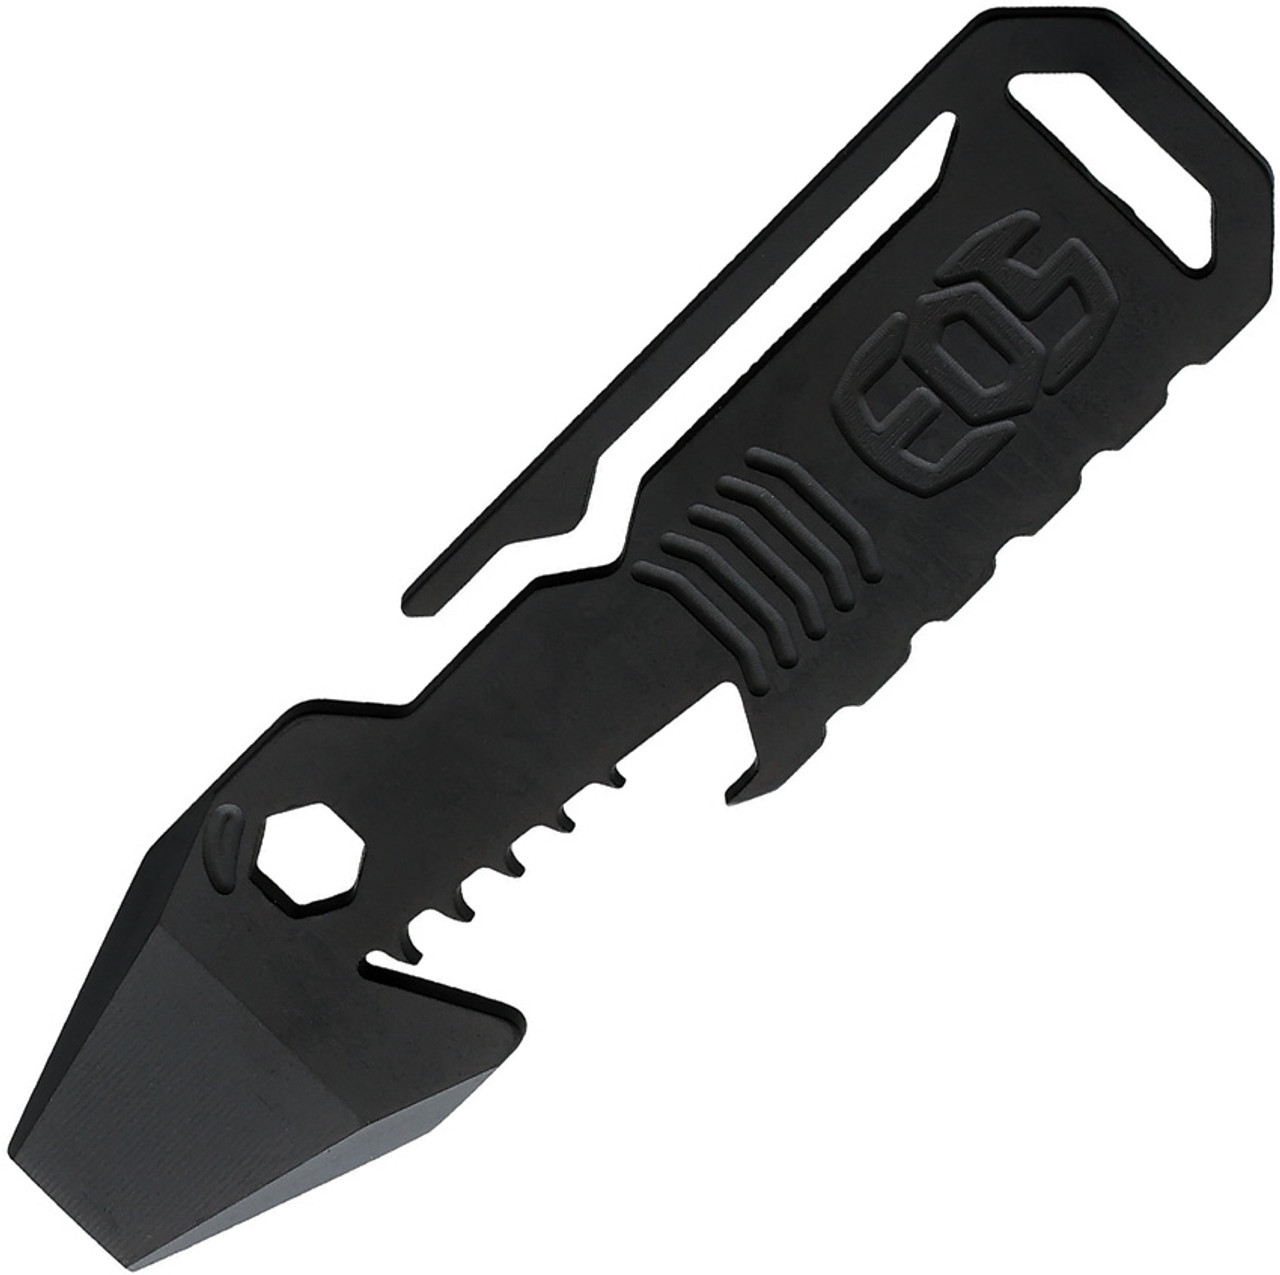 EOS TiShark Pocket Tool / Keychain - 4" Overall DLC Coated Body - Black